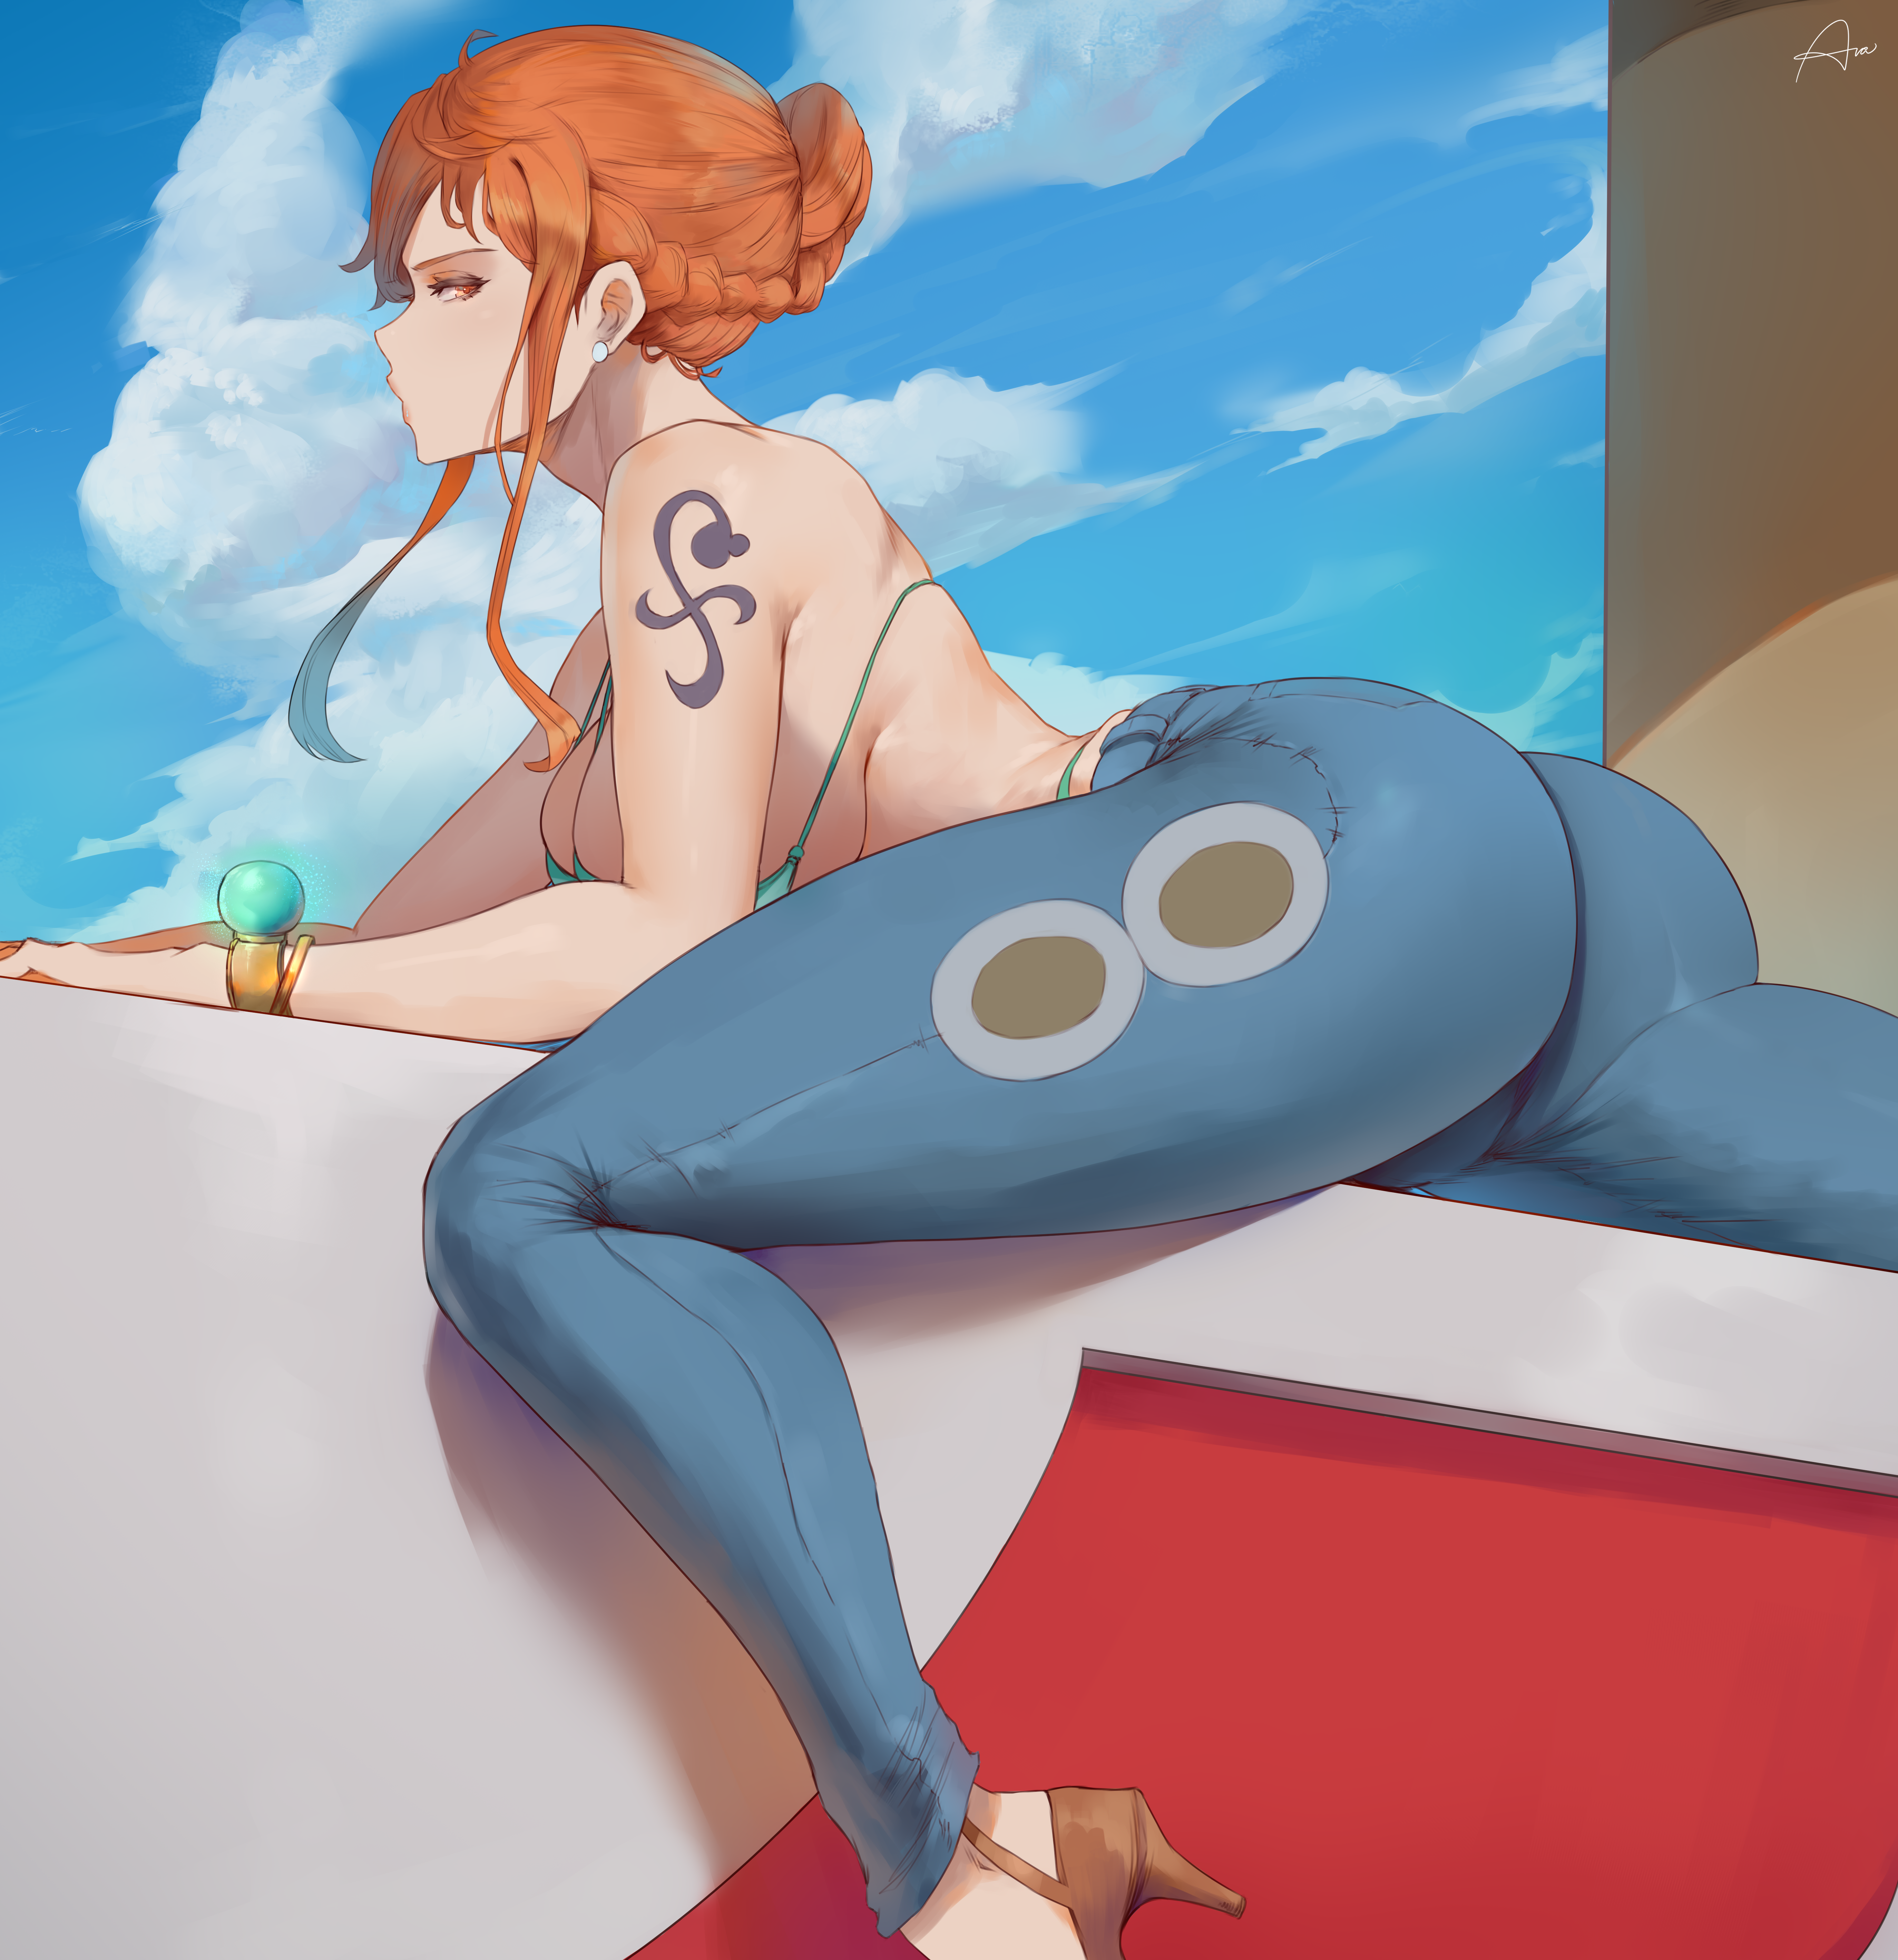 Anime 5500x5679 Nami anime anime girls 2D artwork drawing fan art Araneesama bikini top jeans curvy ass thick thigh redhead braids hairbun sky clouds